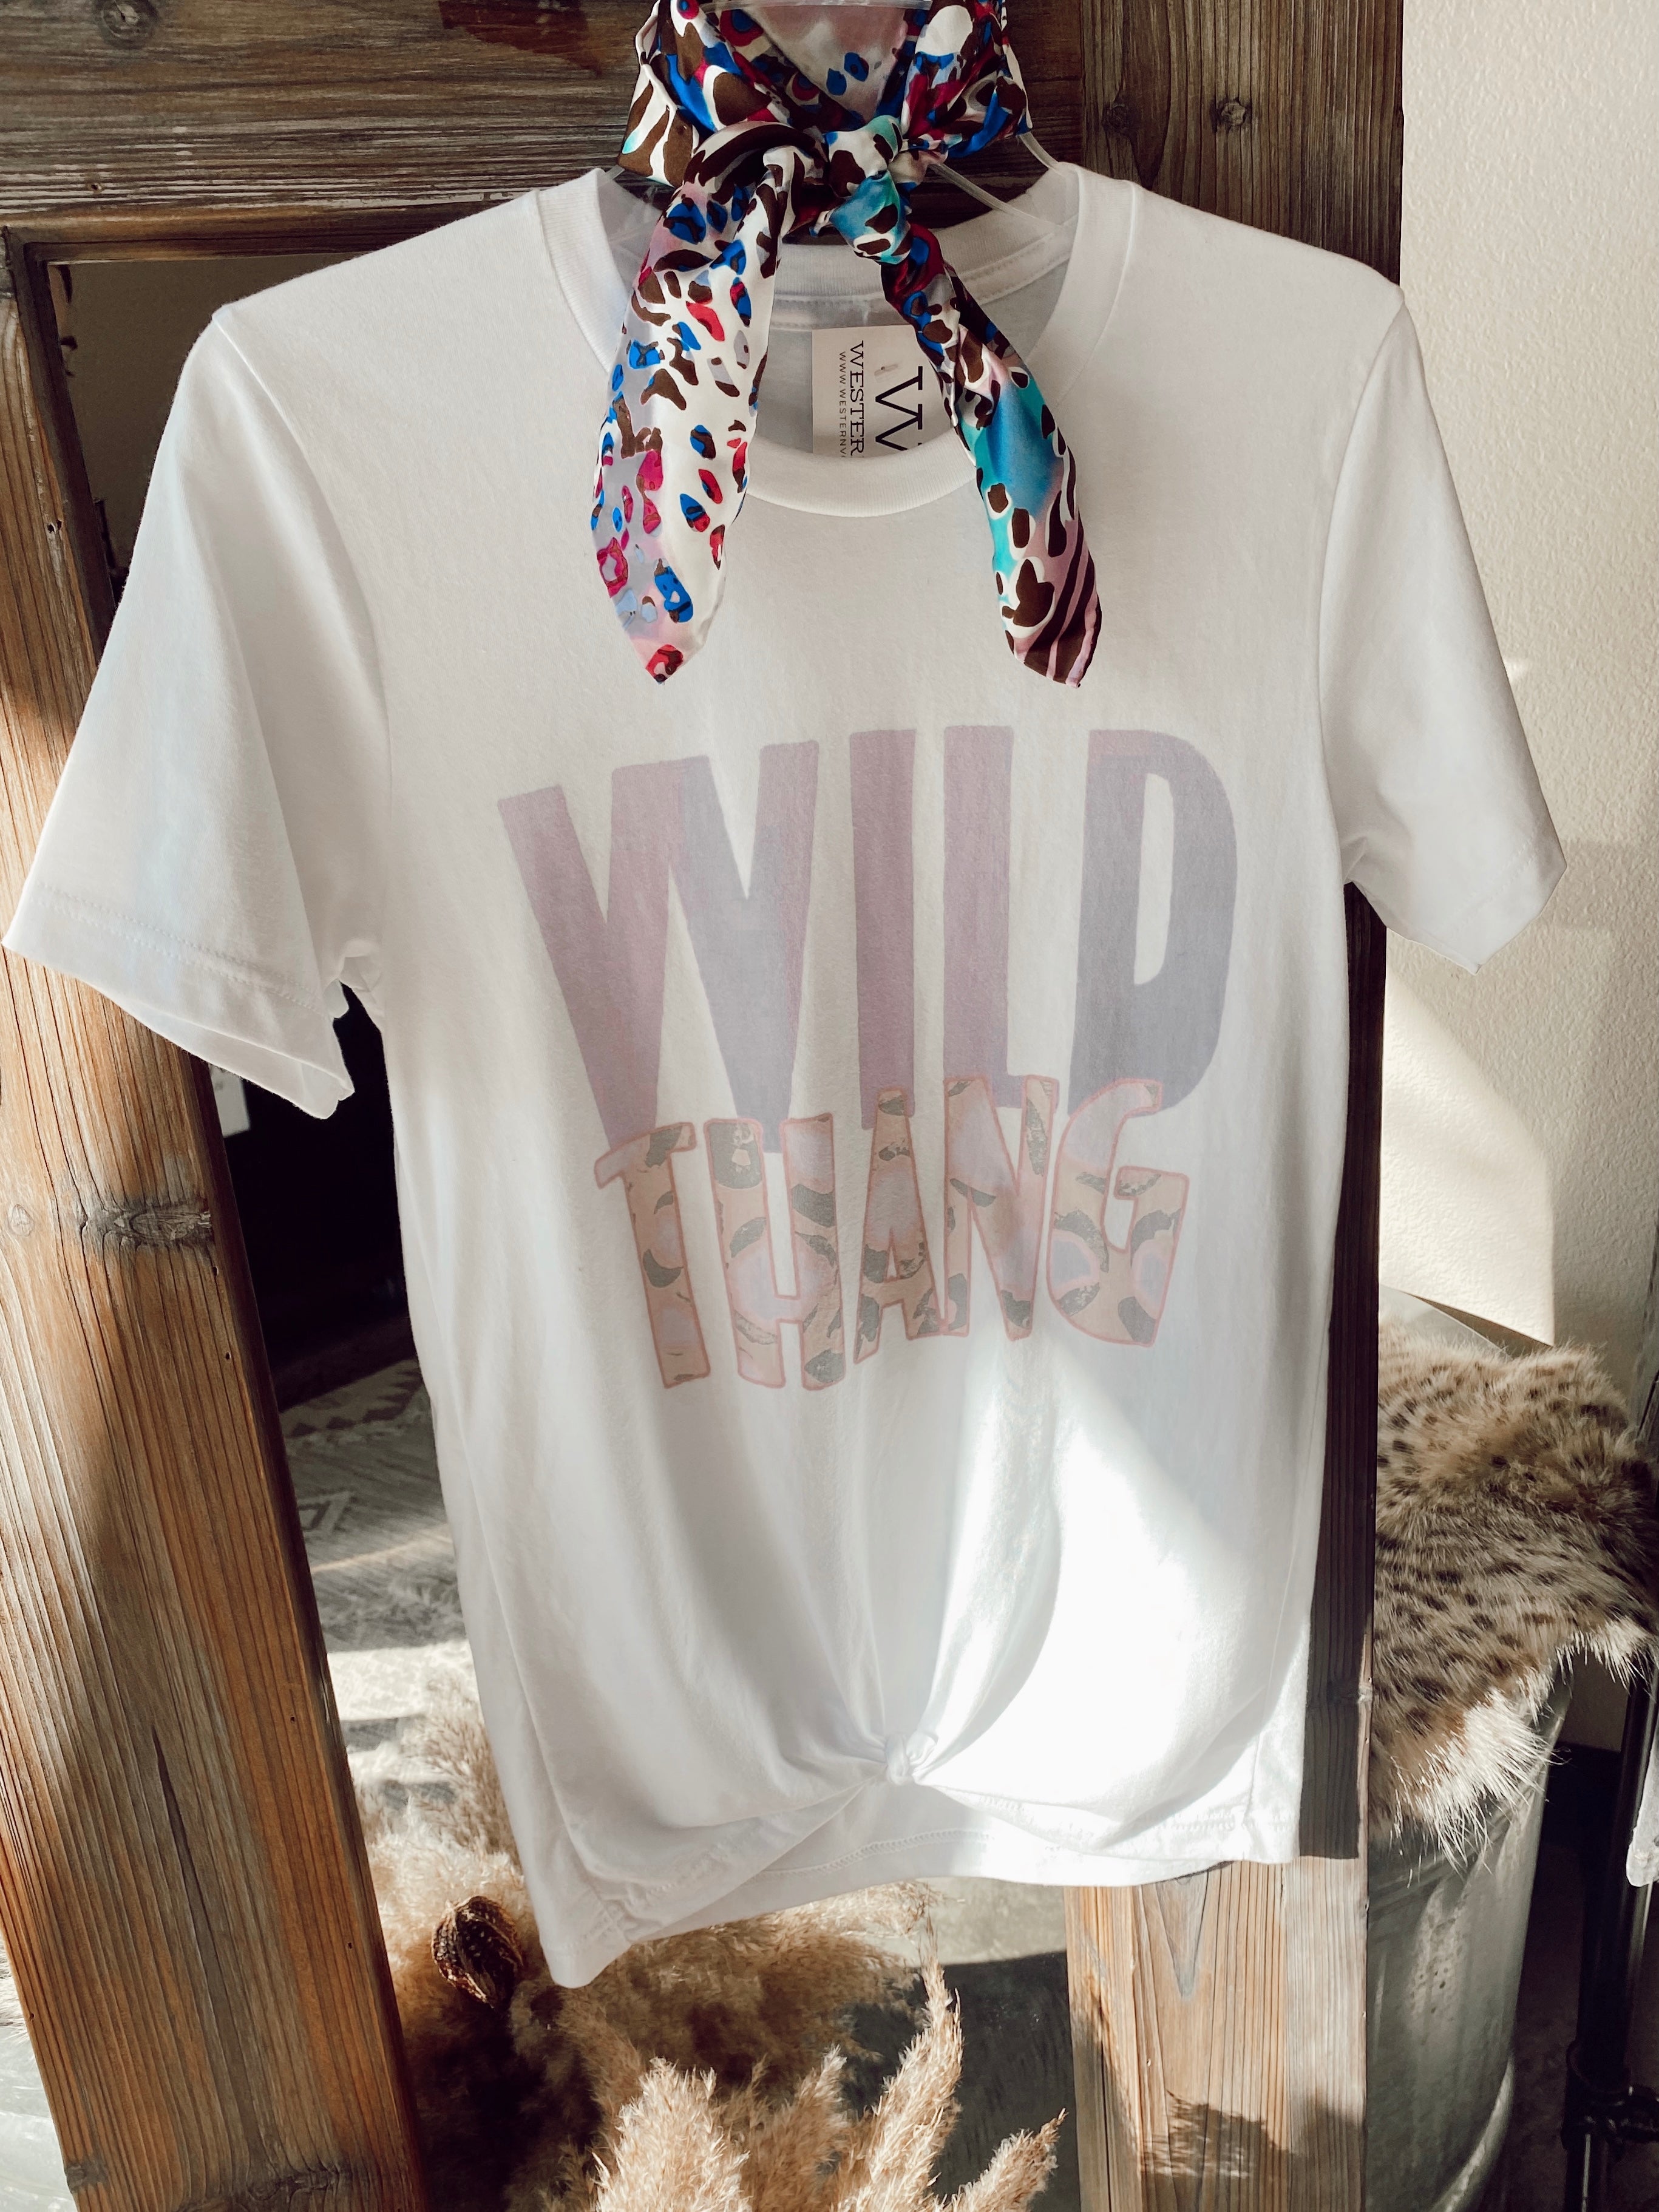 The Wild Thang T-Shirt